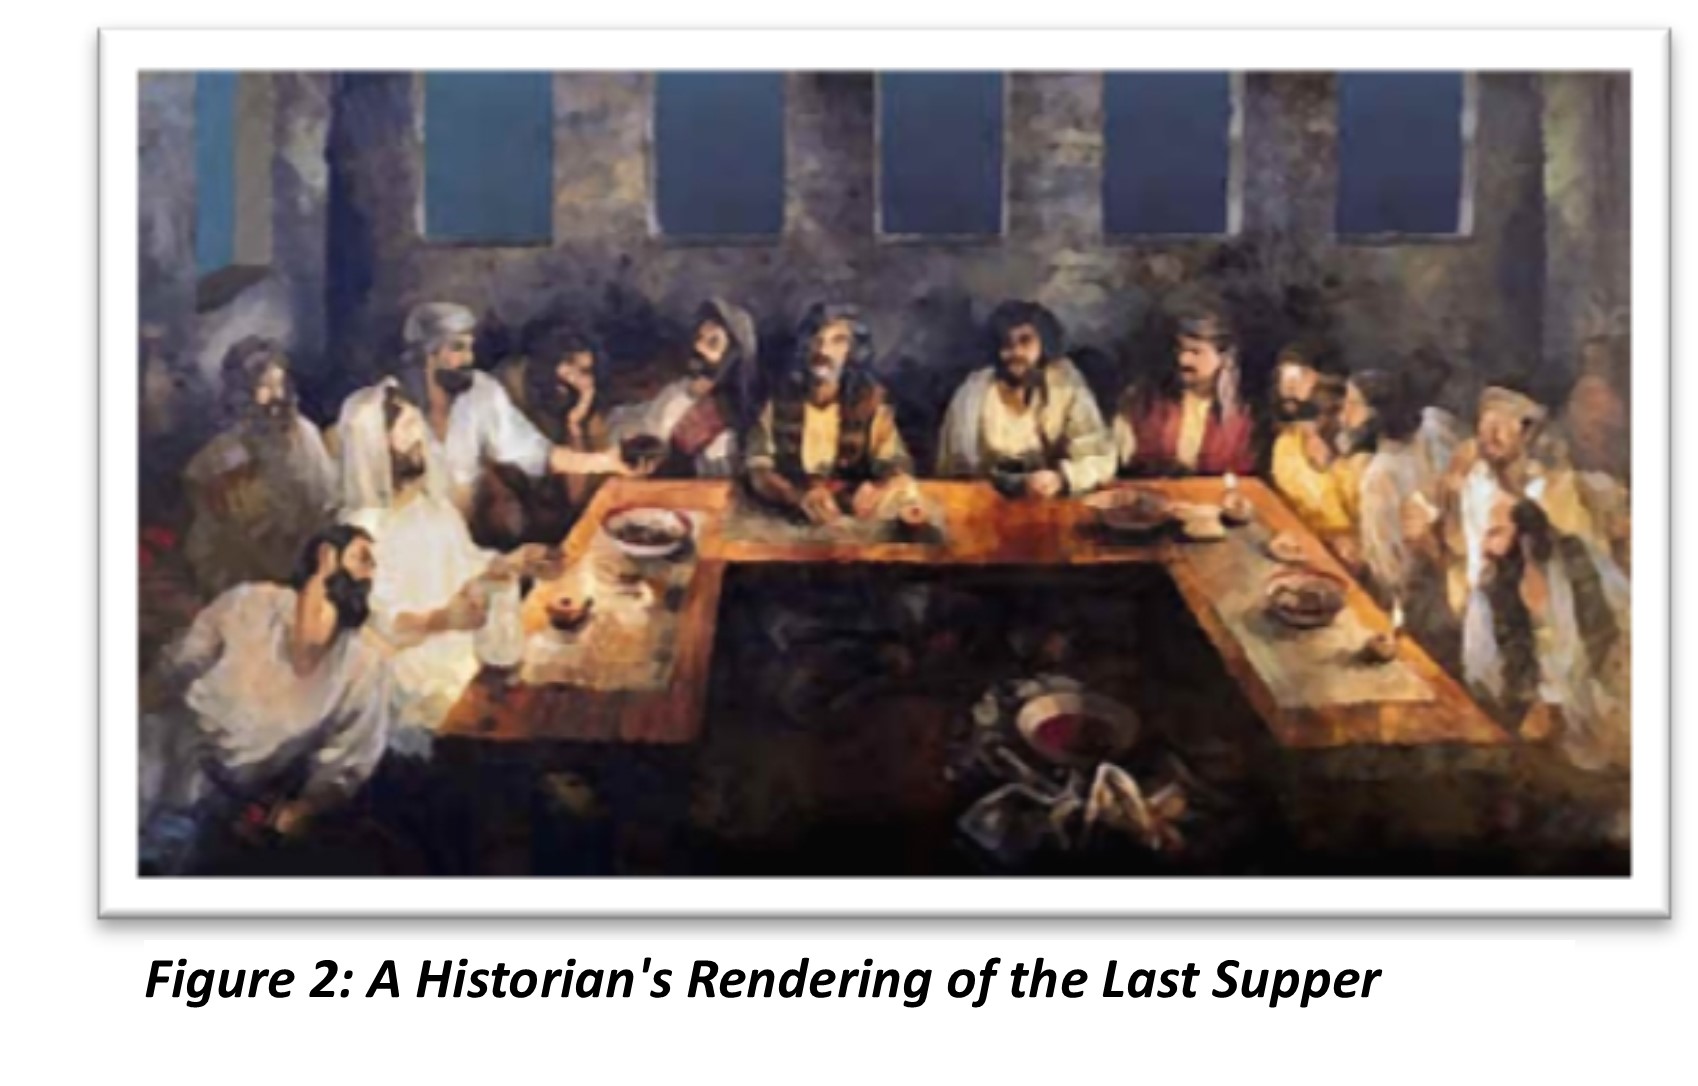 Historian's Last Supper